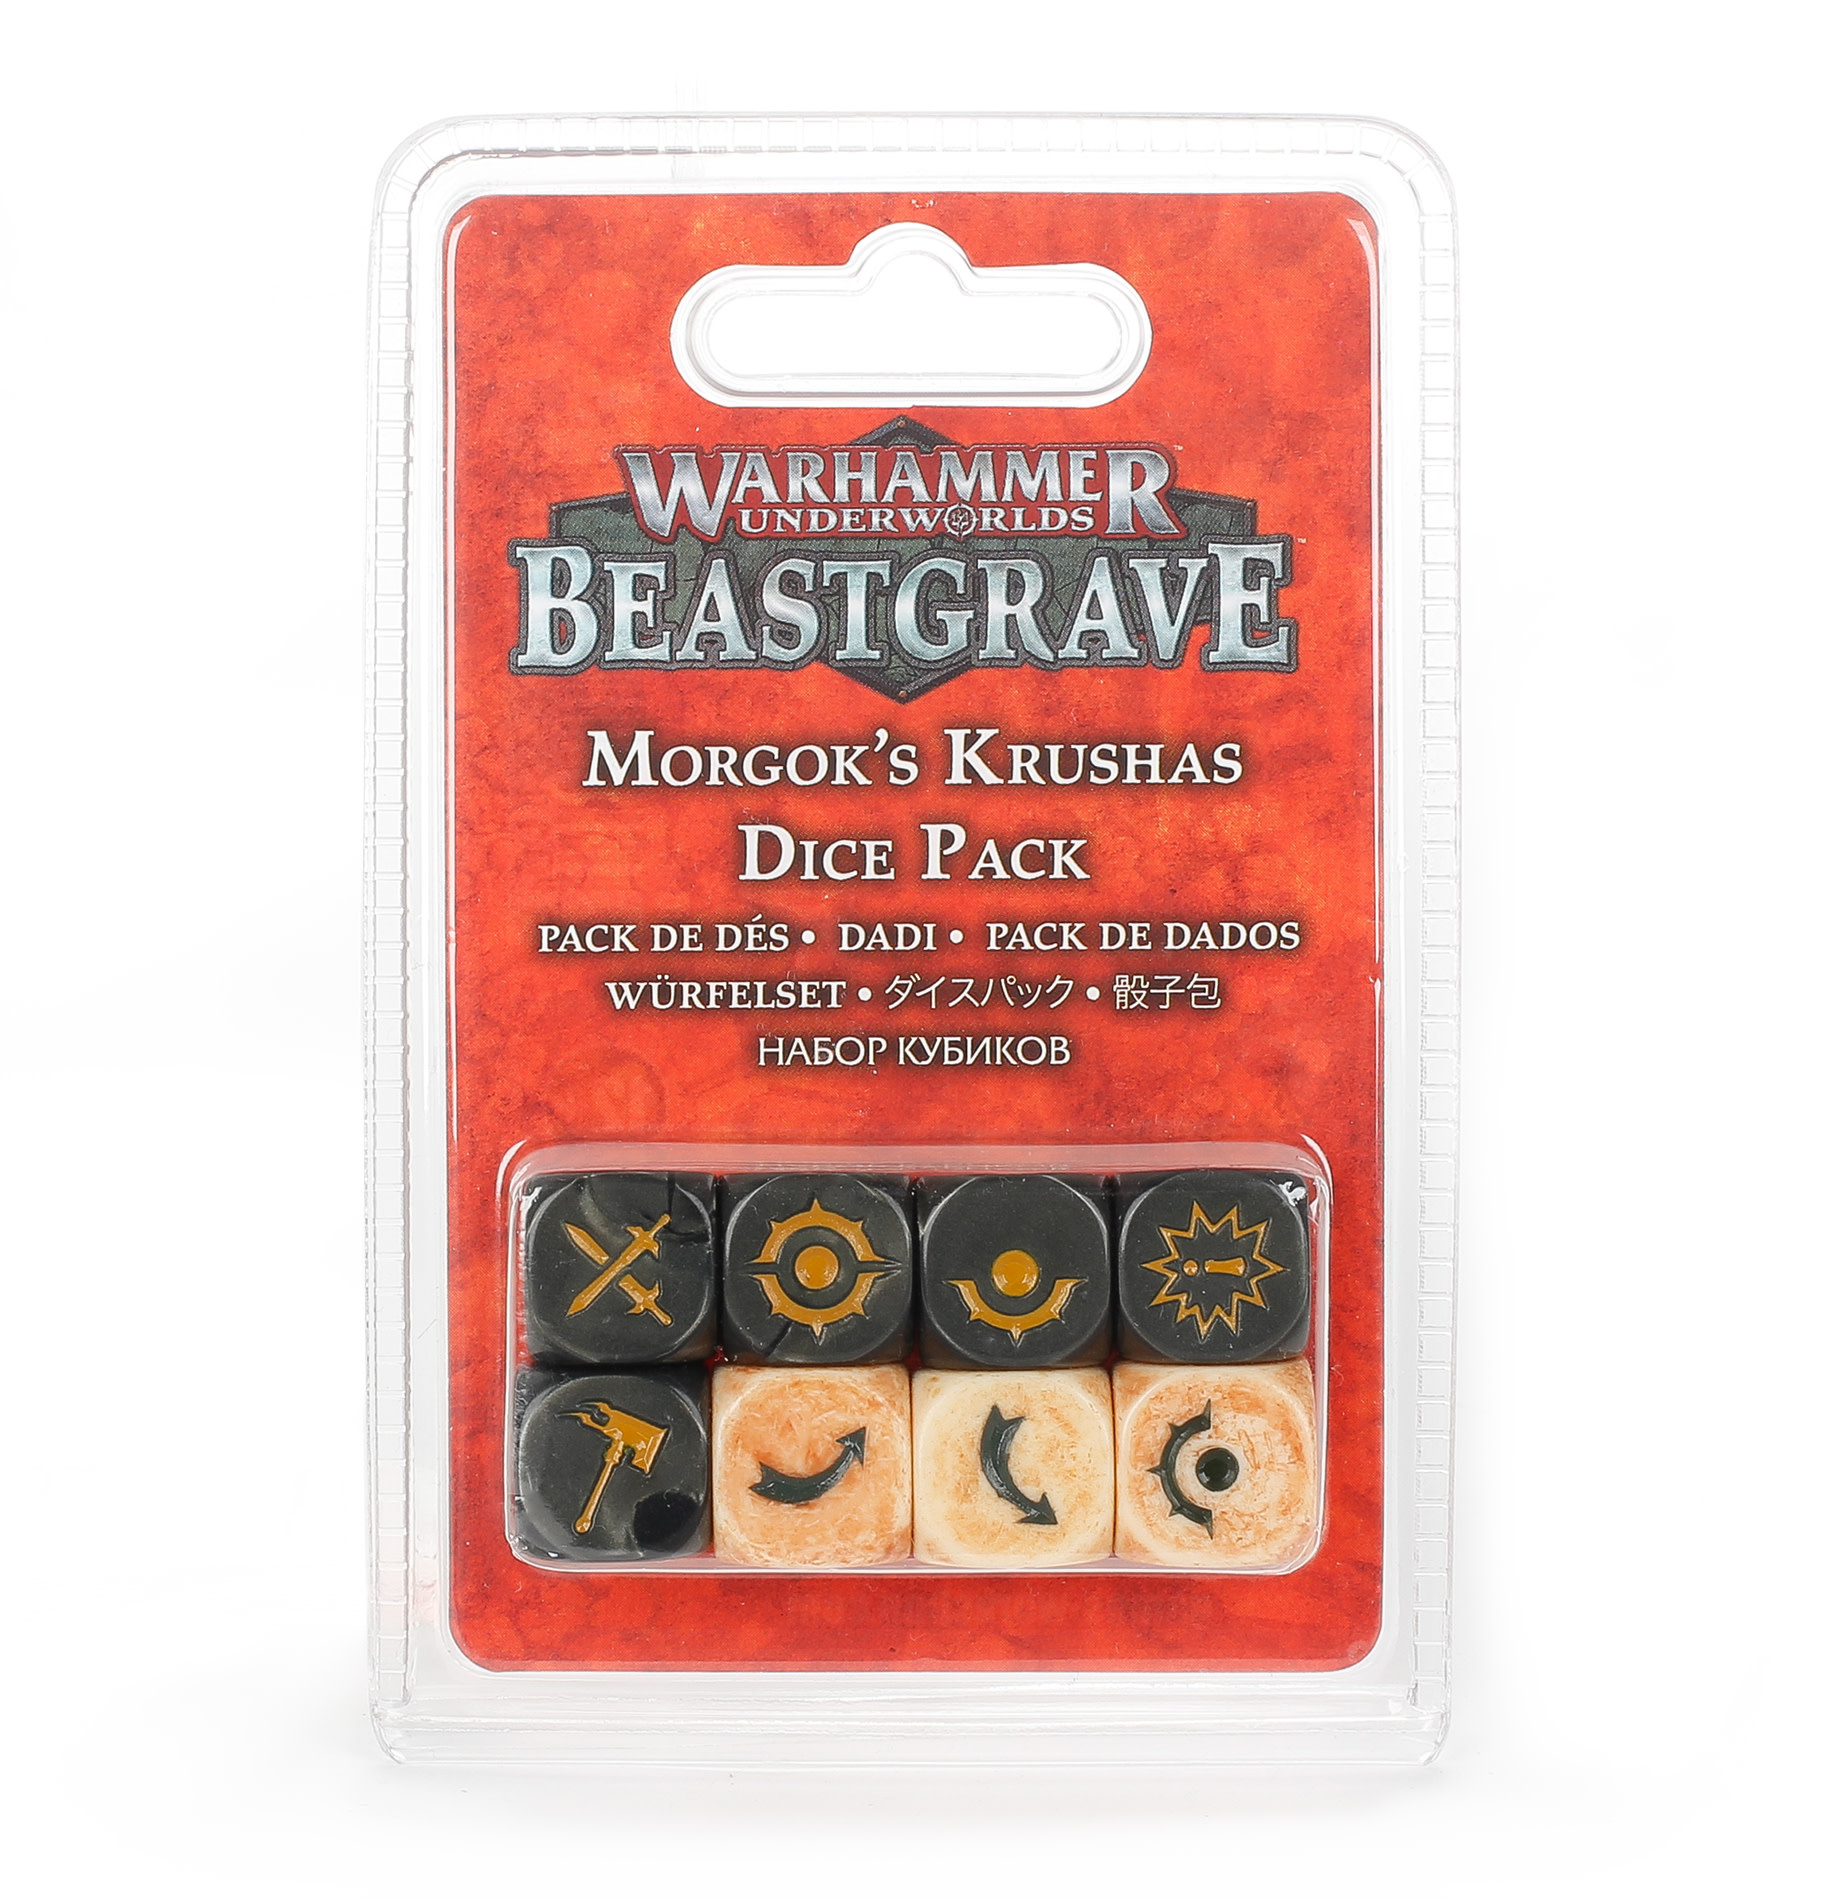 Warhammer Underworlds: Beastgrave: Morgoks Krushas Dice Pack 